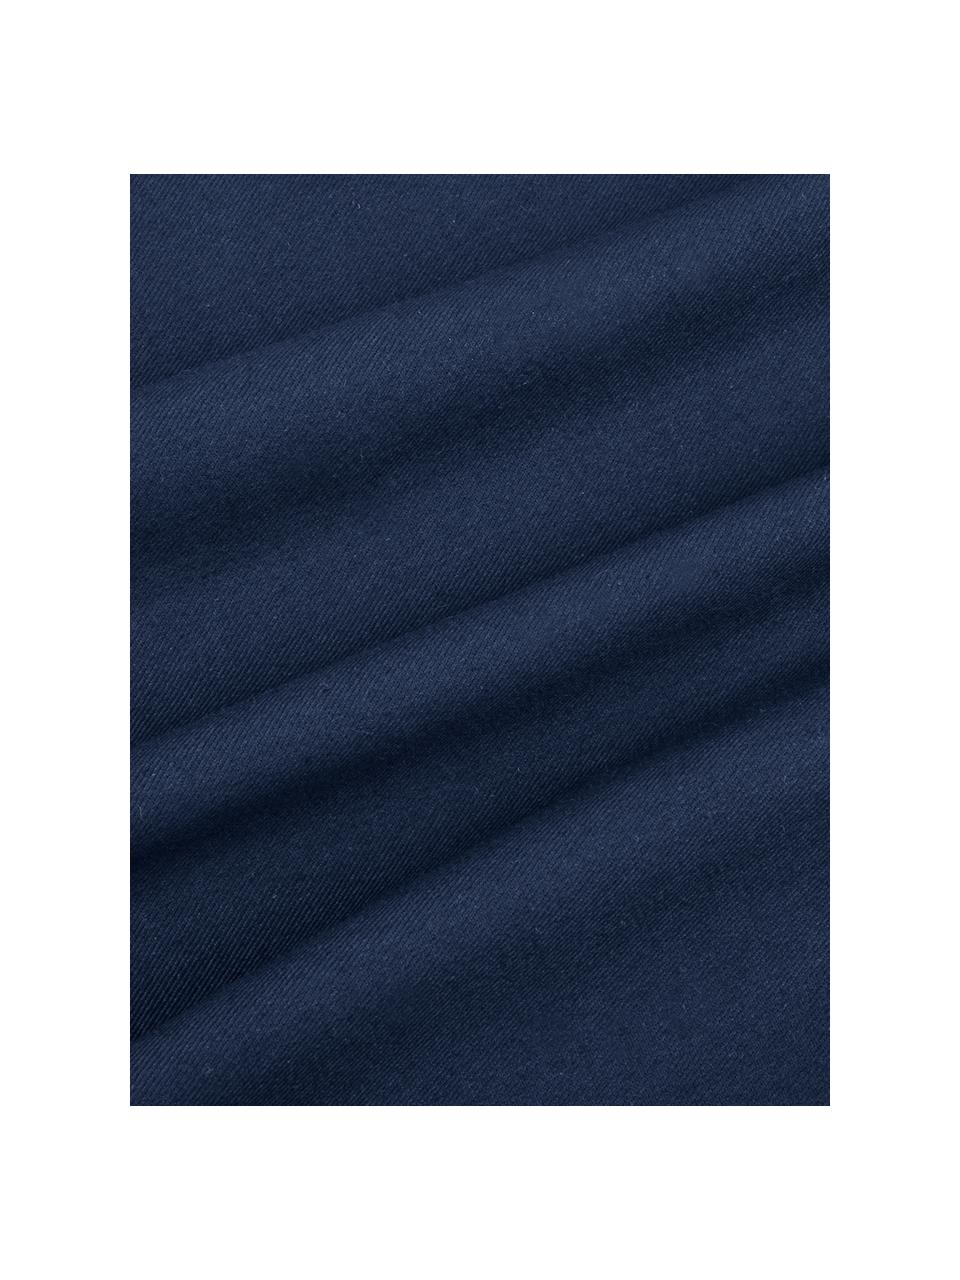 Housse de coussin coton bleu marine Mads, Bleu marine